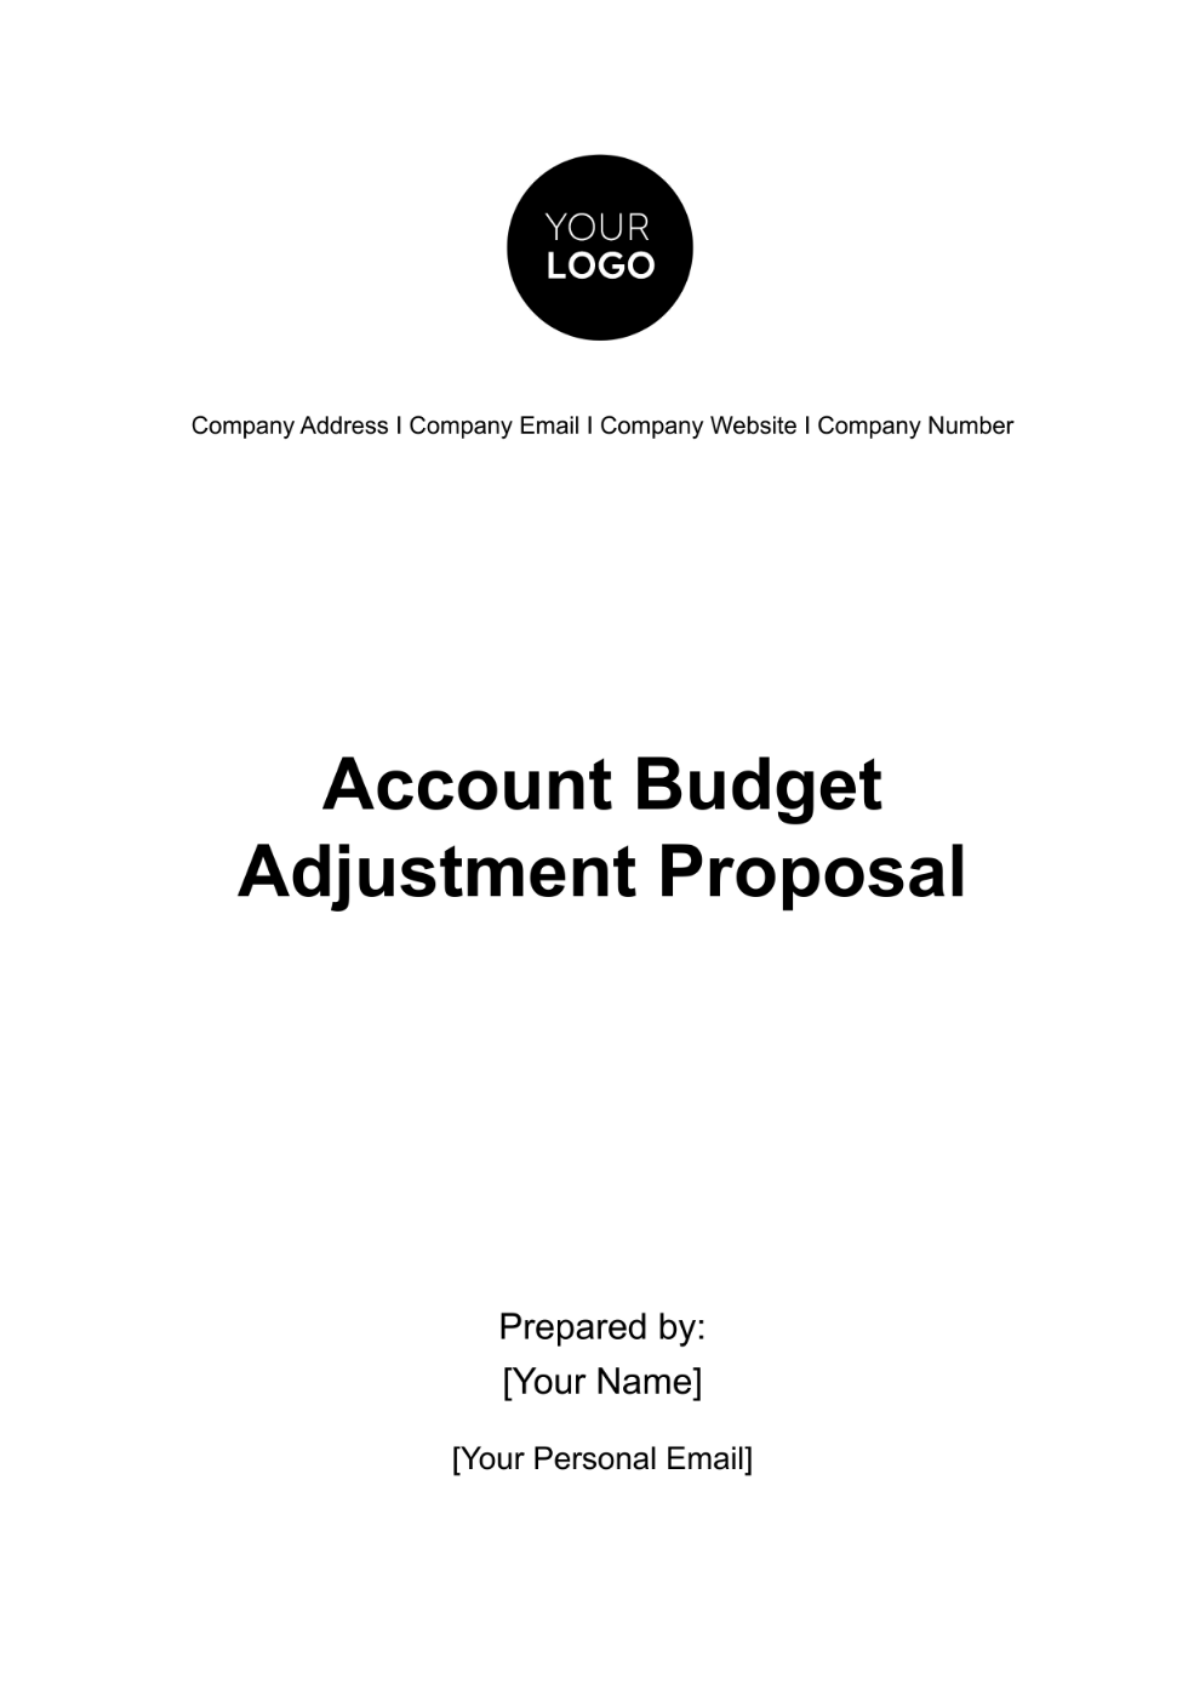 Account Budget Adjustment Proposal Template